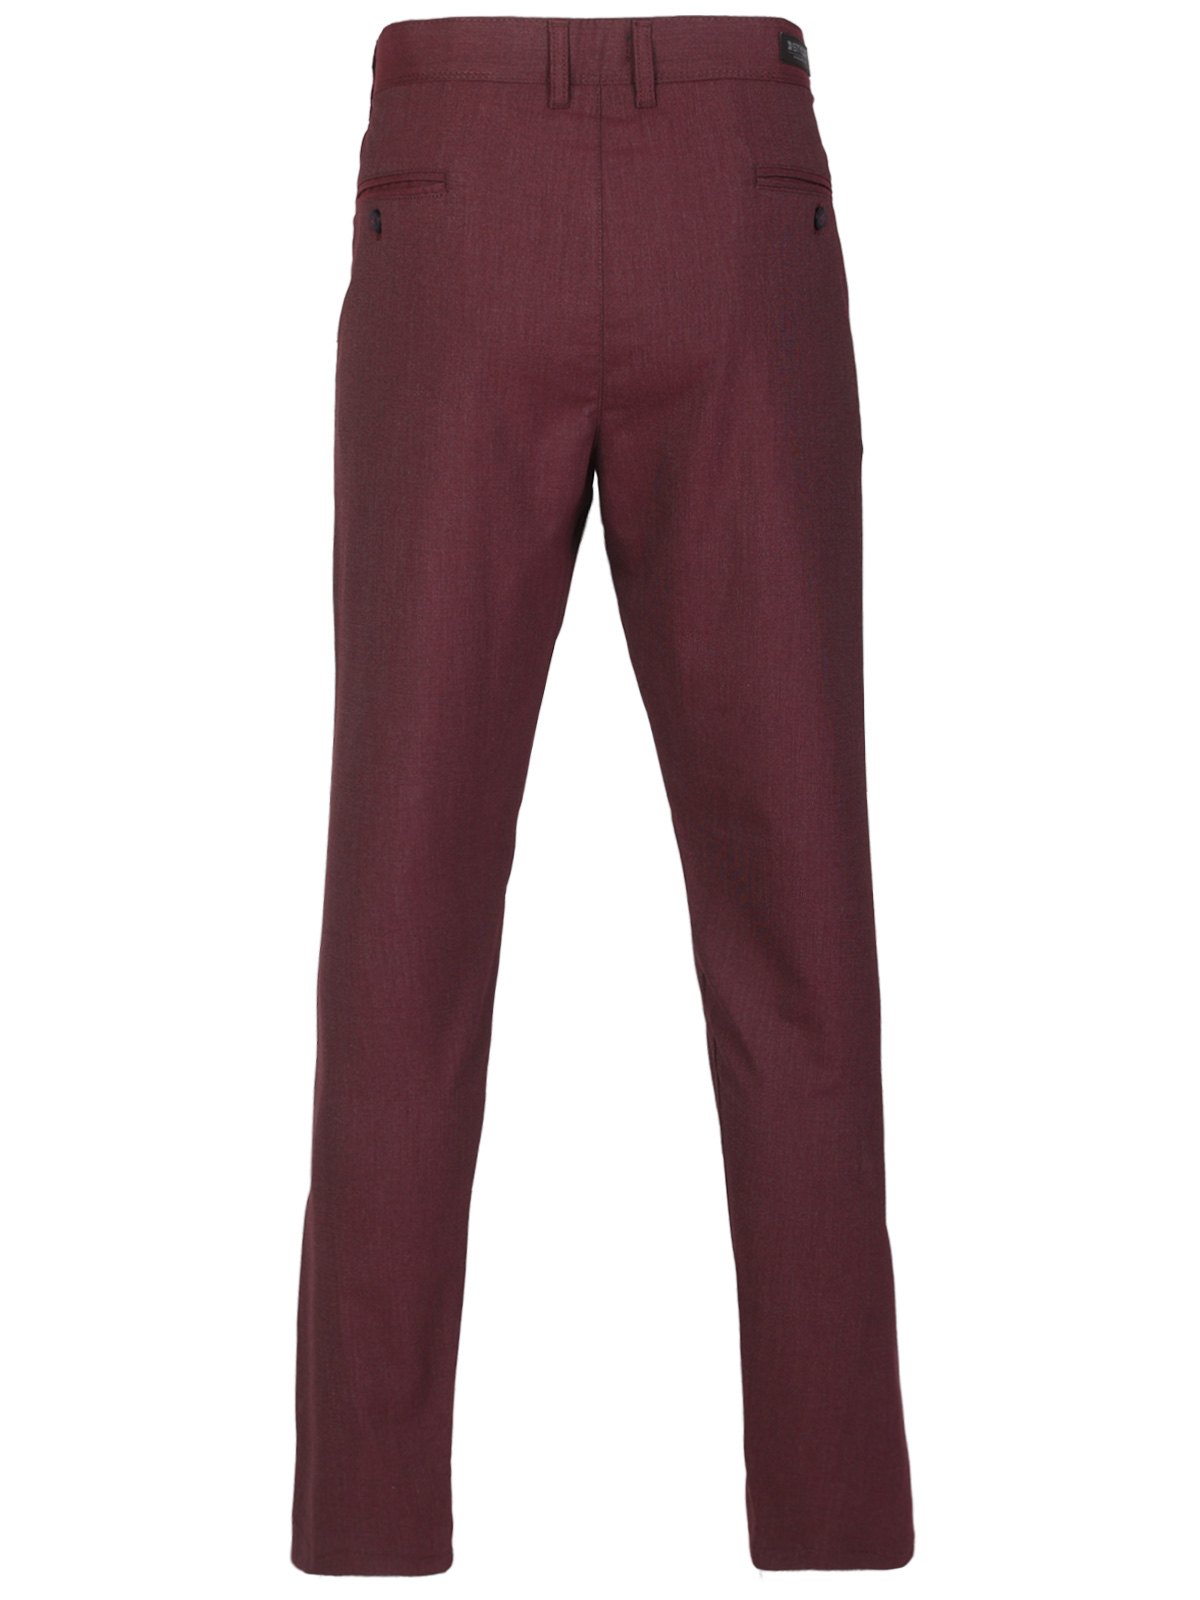 Pantaloni de culoare burgundy melange - 60312 € 66.37 img2